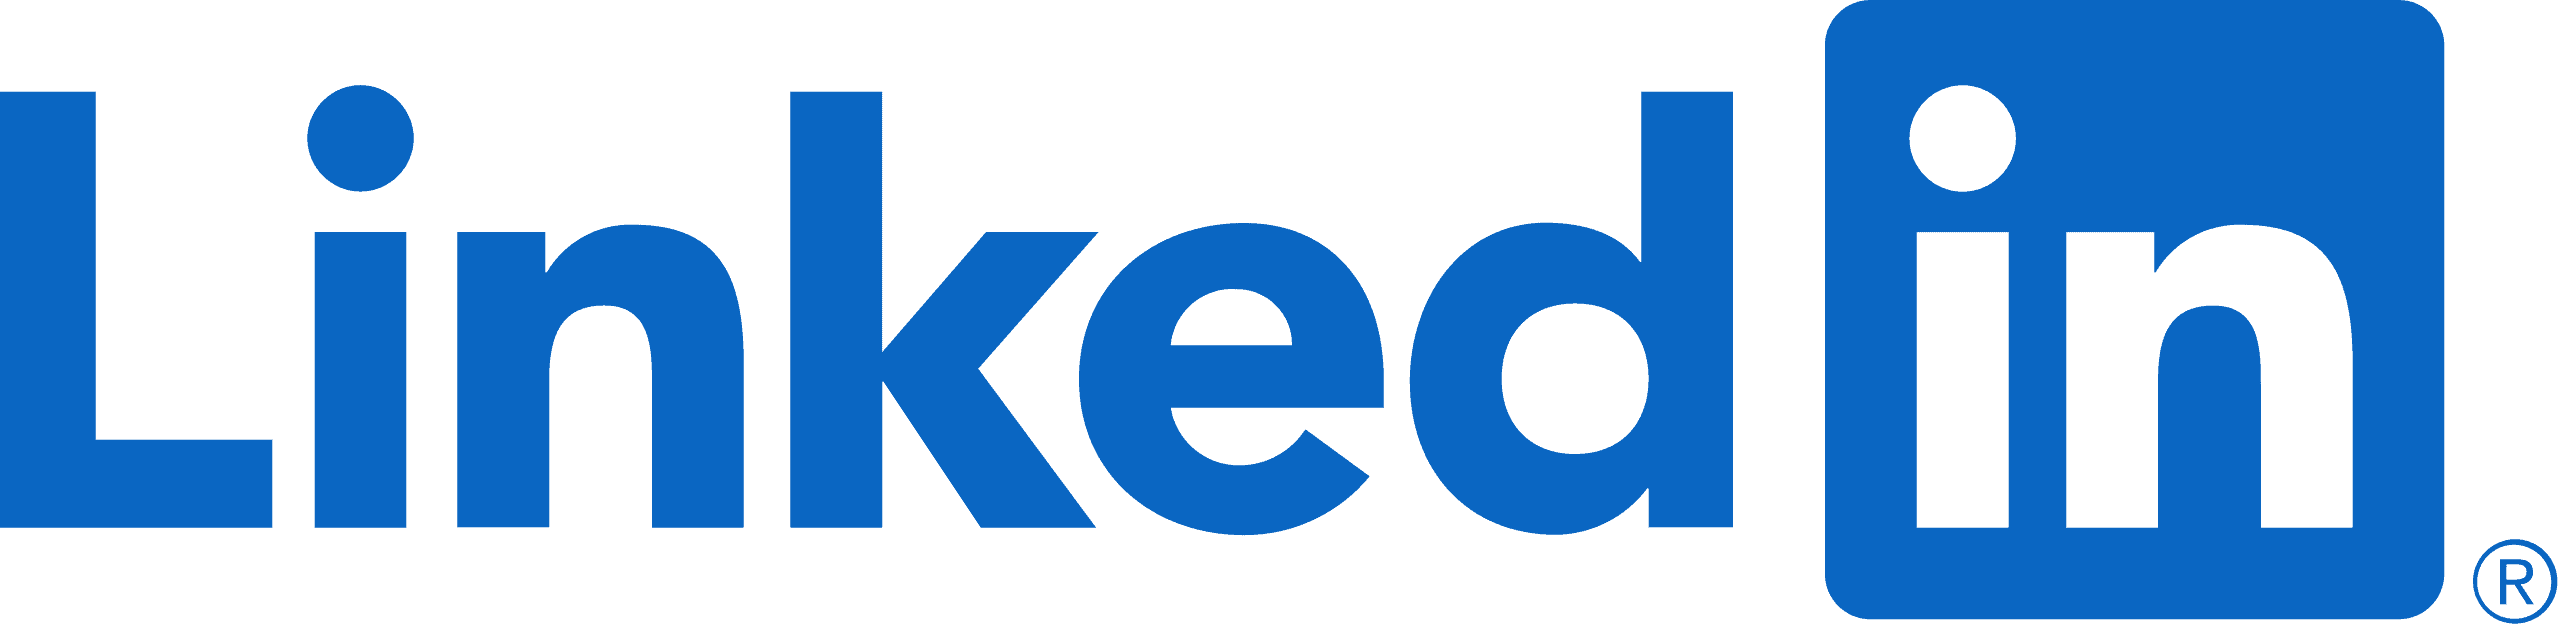 LinkedIn_Logo.svg